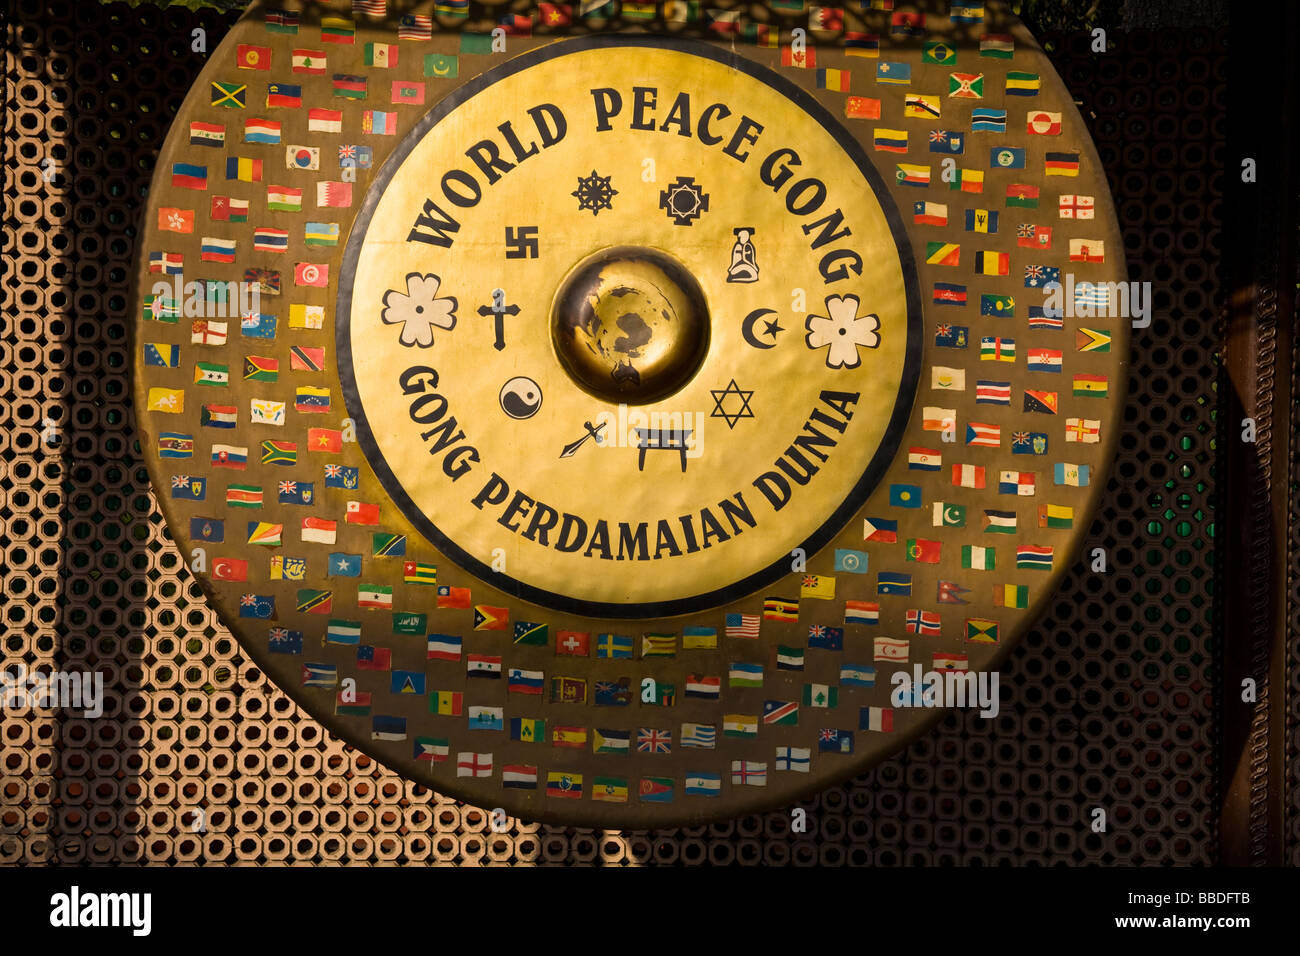 World Peace Gong at the Gandhi Smriti, 5 Tees January Marg, New Delhi, Delhi, India Stock Photo